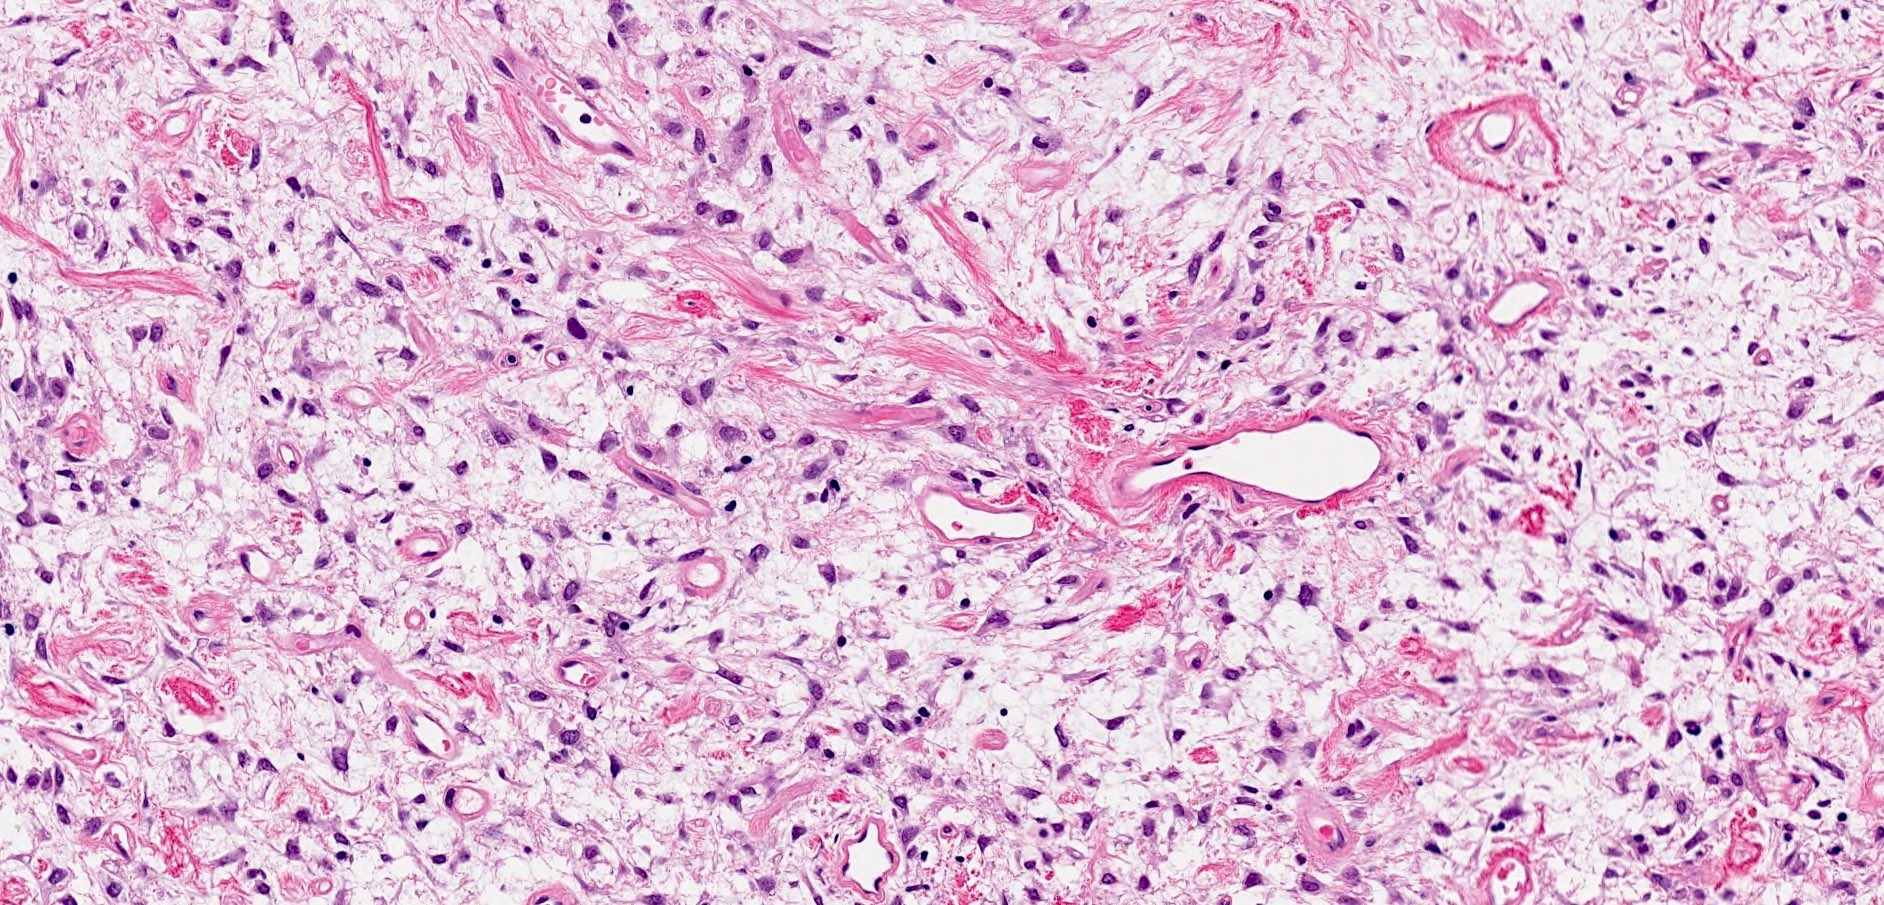 Myxoid solitary fibrous tumor